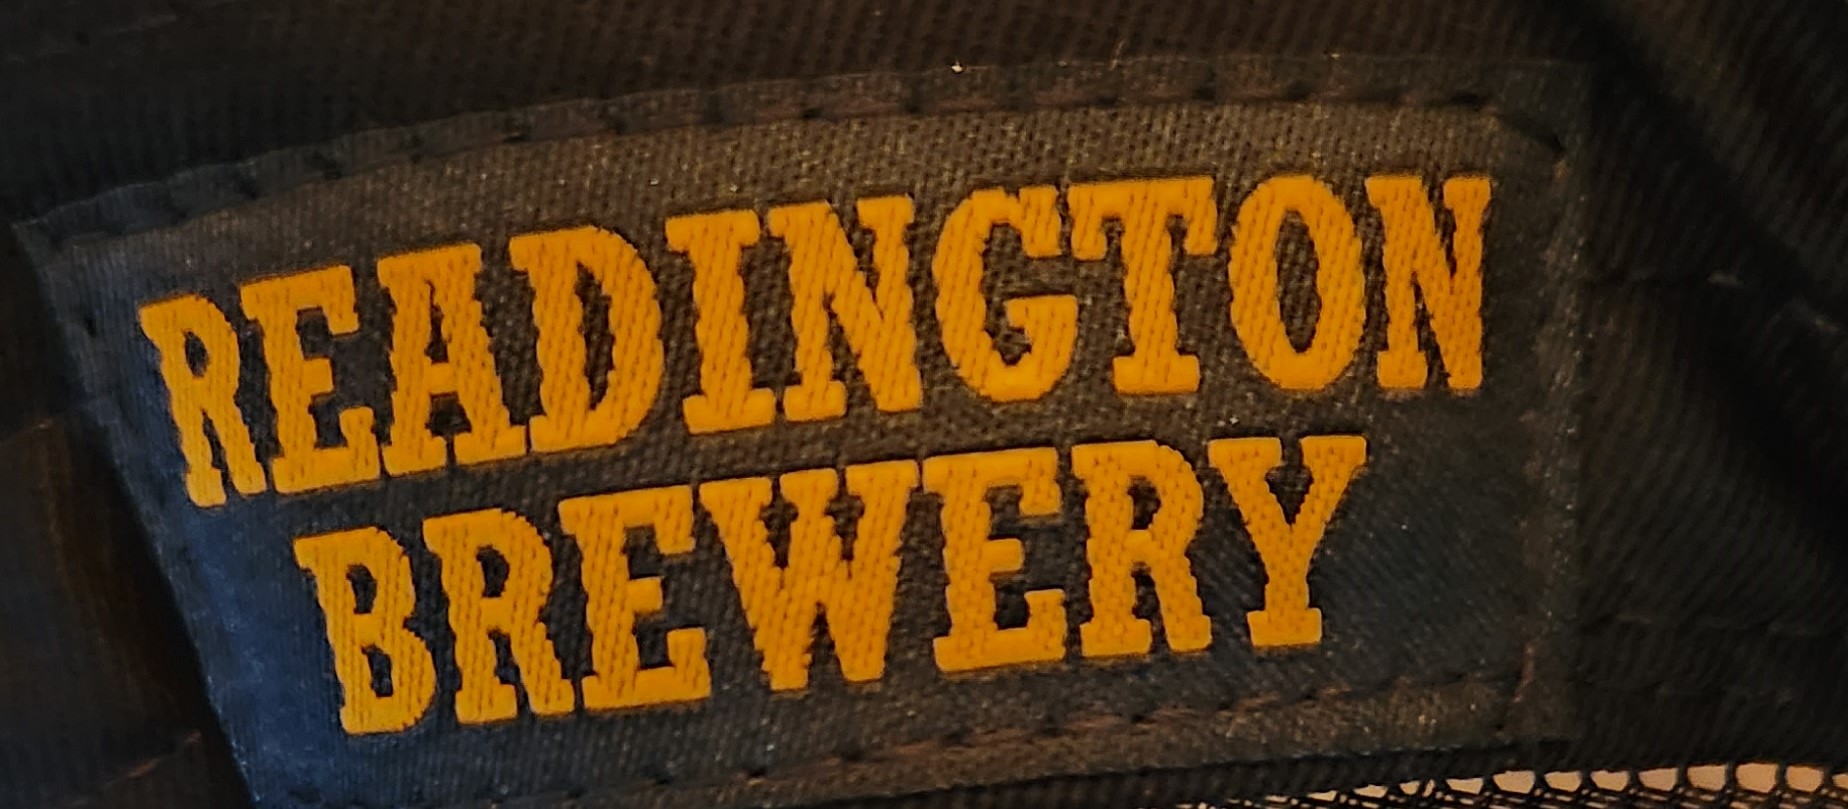 Readington Brewery - Trucker Hats - Latte/Black - Readington Brewery ...